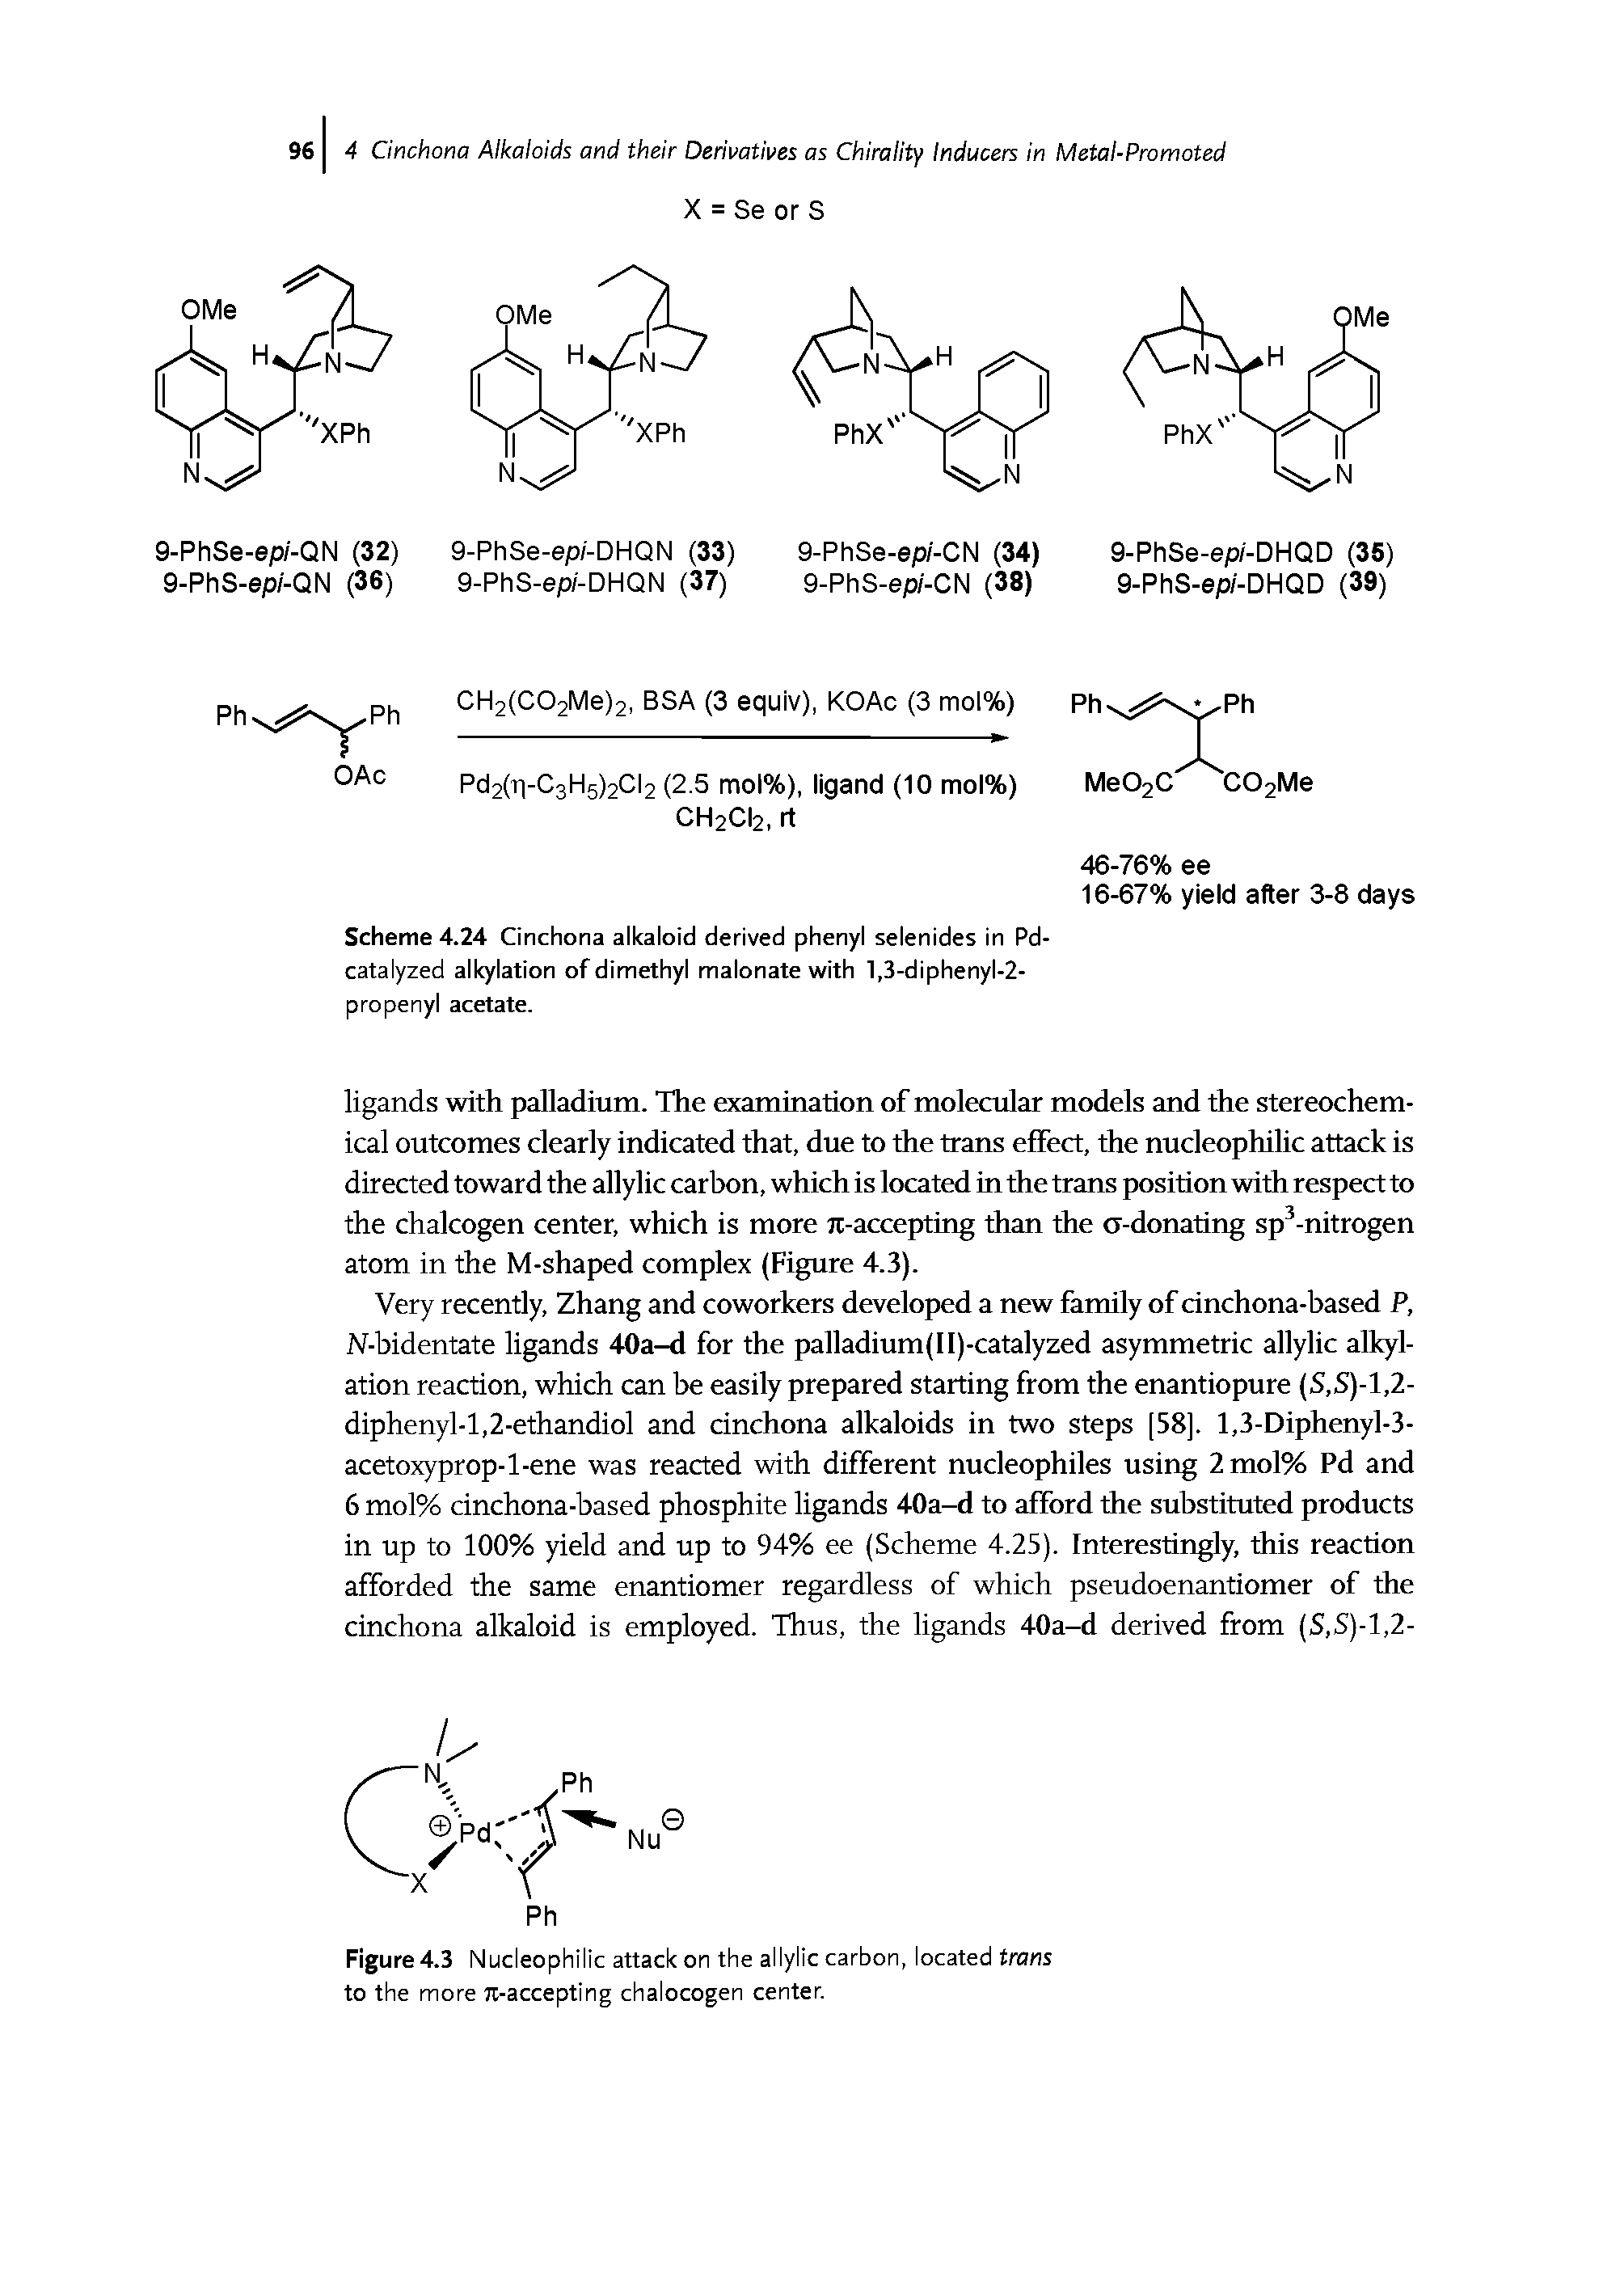 Scheme 4.24 Cinchona alkaloid derived phenyl selenides in Pd-catalyzed alkylation of dimethyl malonate with l,3-diphenyl-2-propenyl acetate.